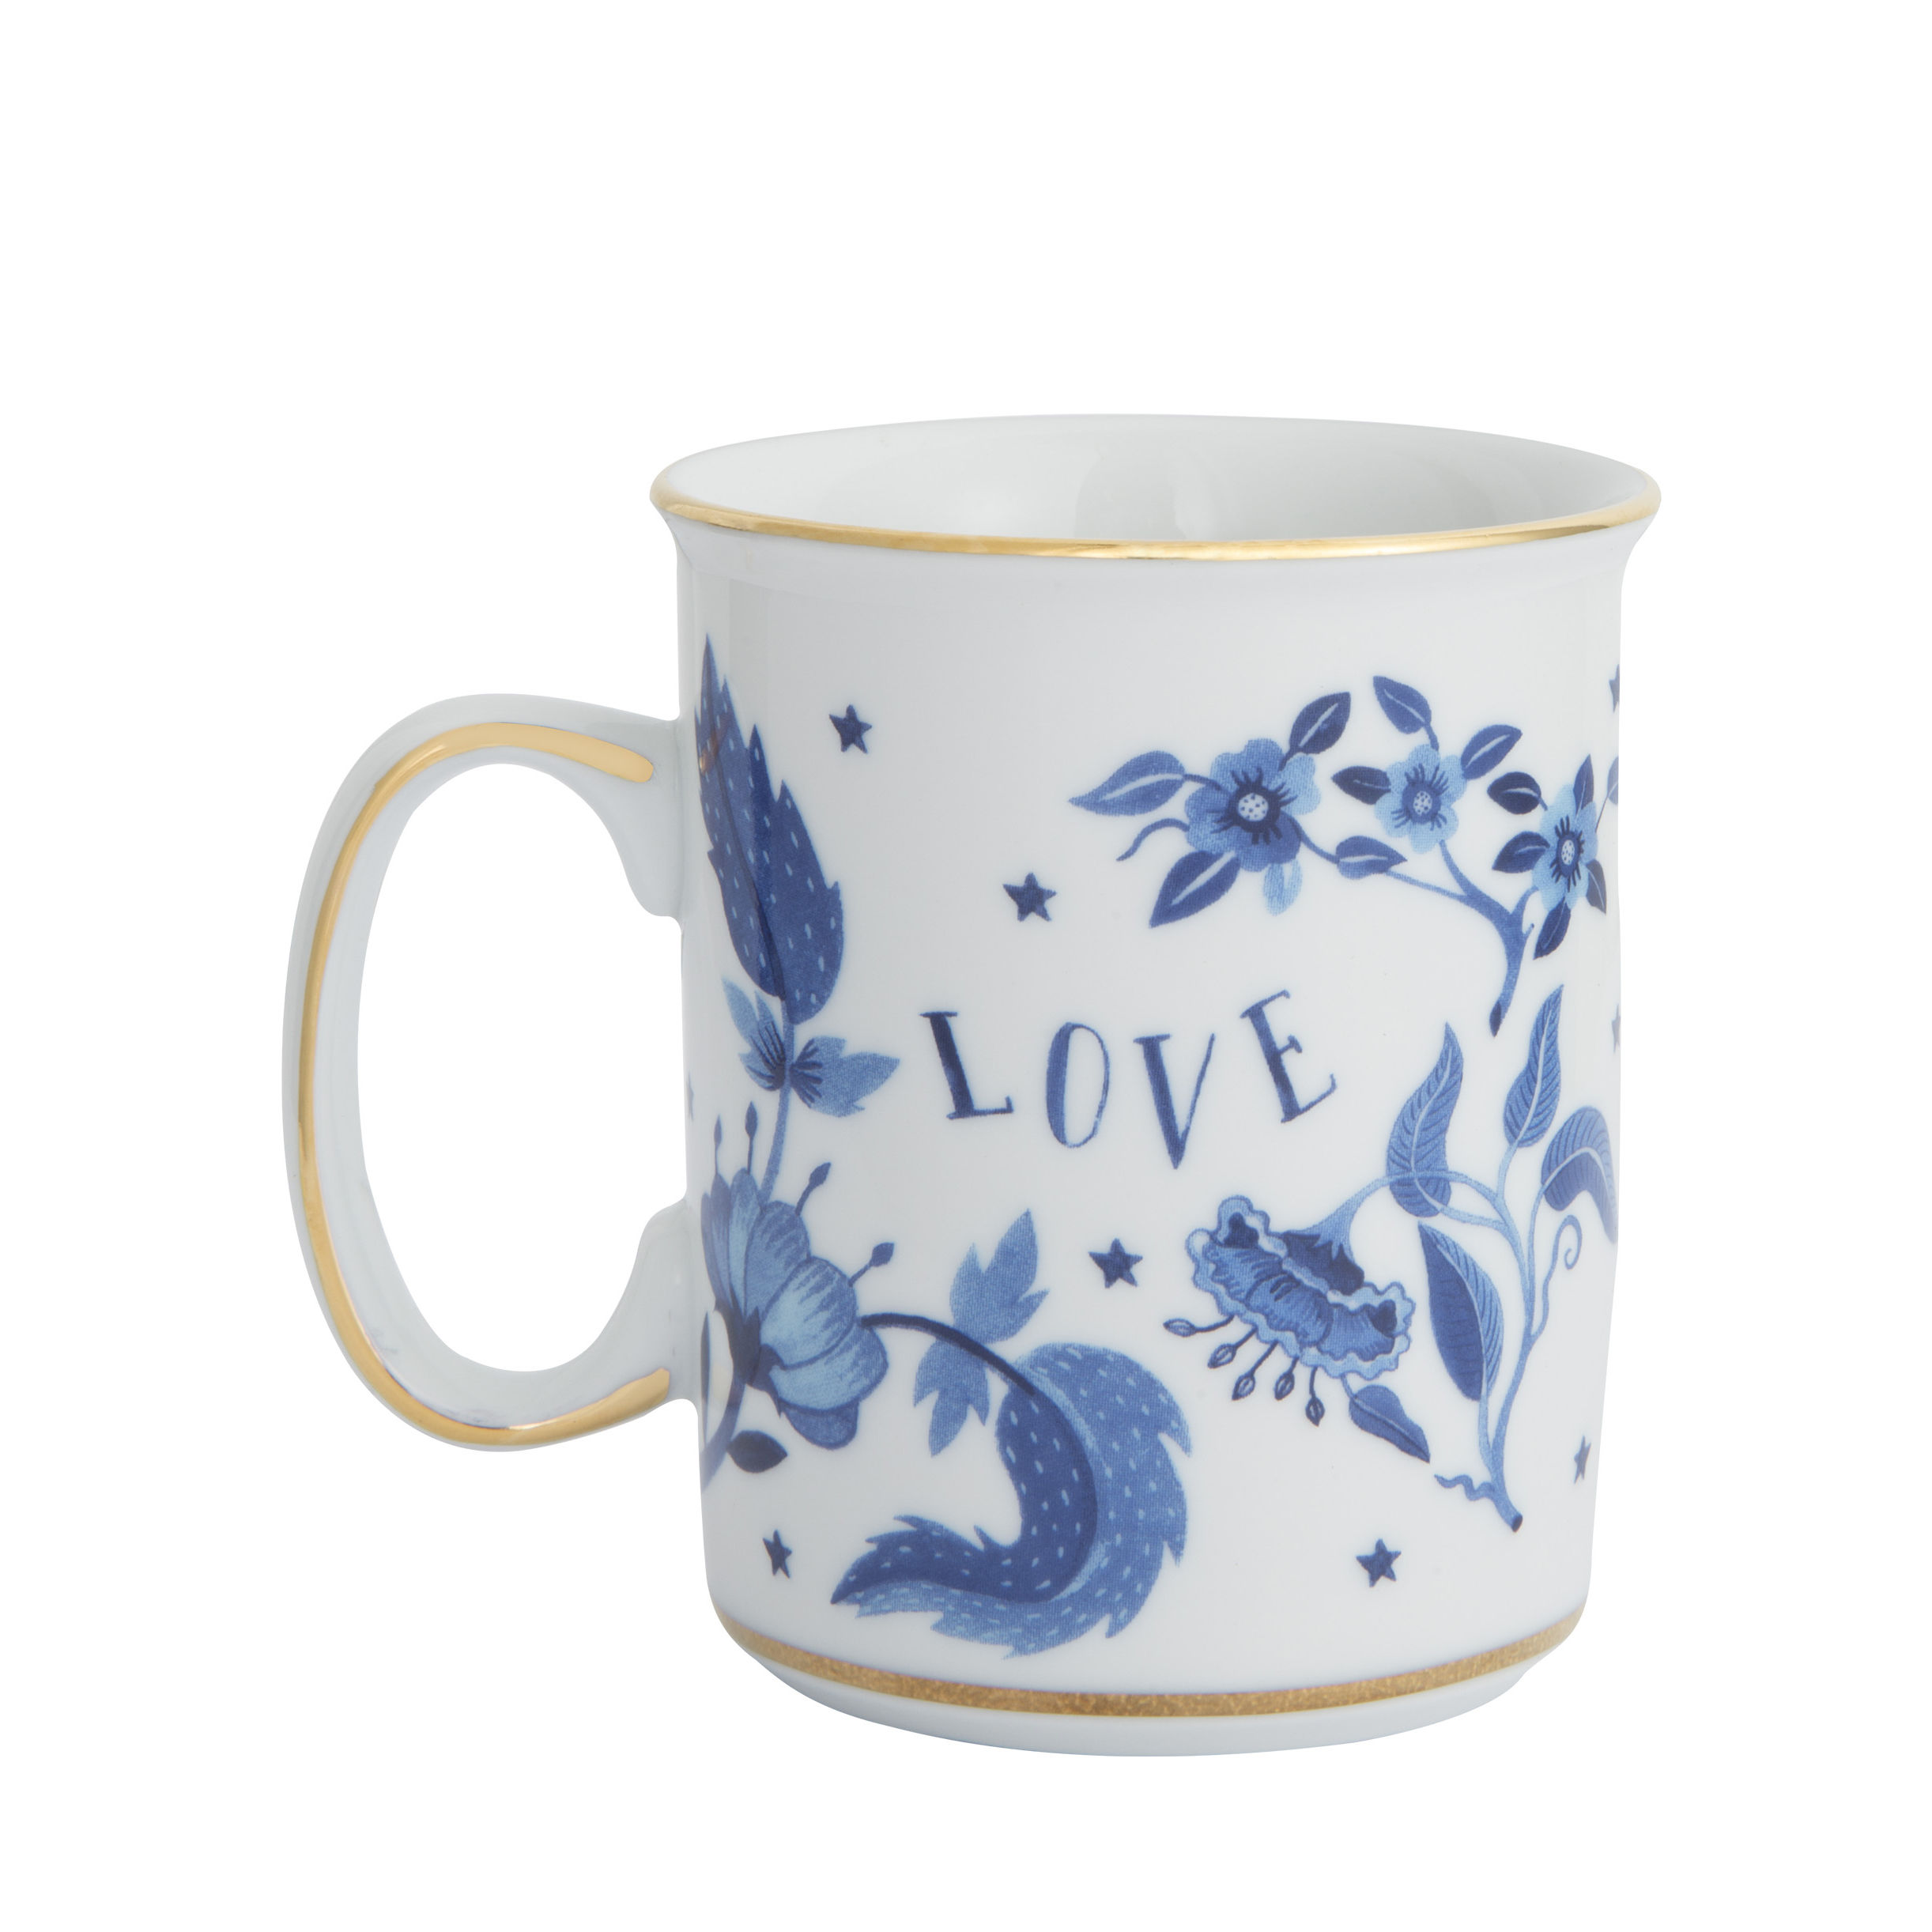 Arts de la table - Tasses et mugs - Mug Love blu / Porcelaine - Bitossi Home - Love Blu / Bleu - Porcelaine